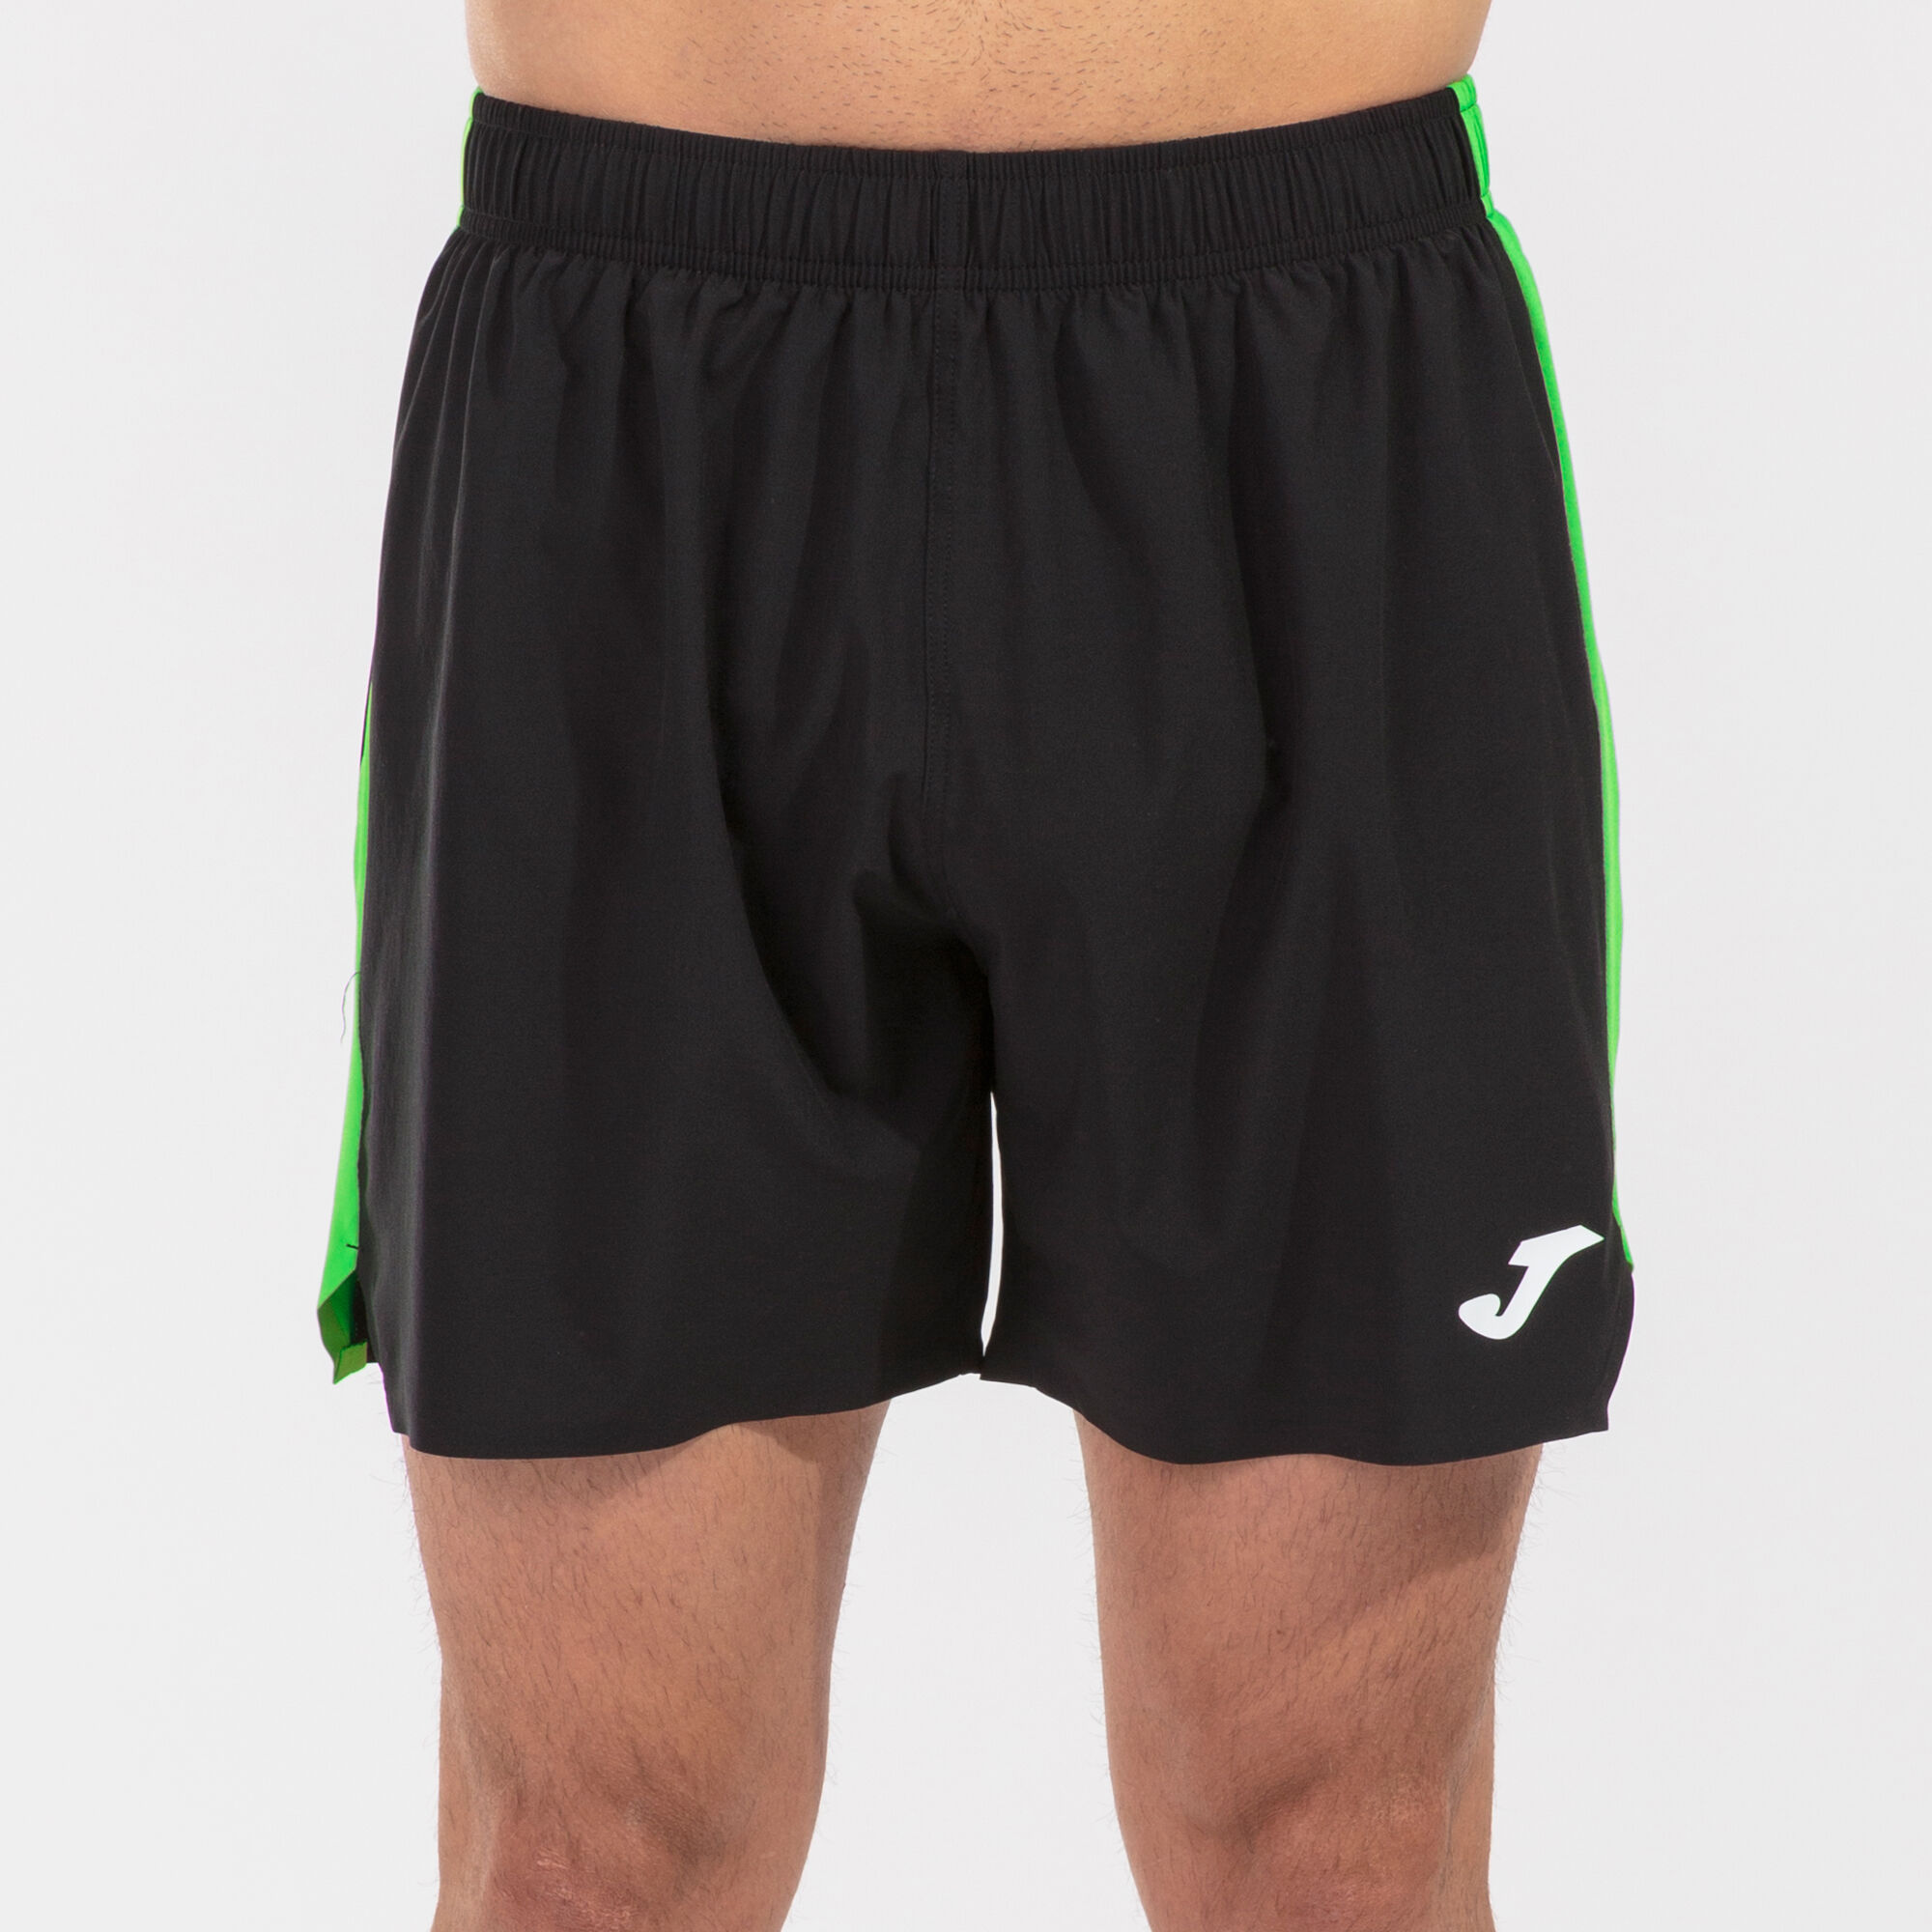 Shorts man Elite VII black fluorescent green